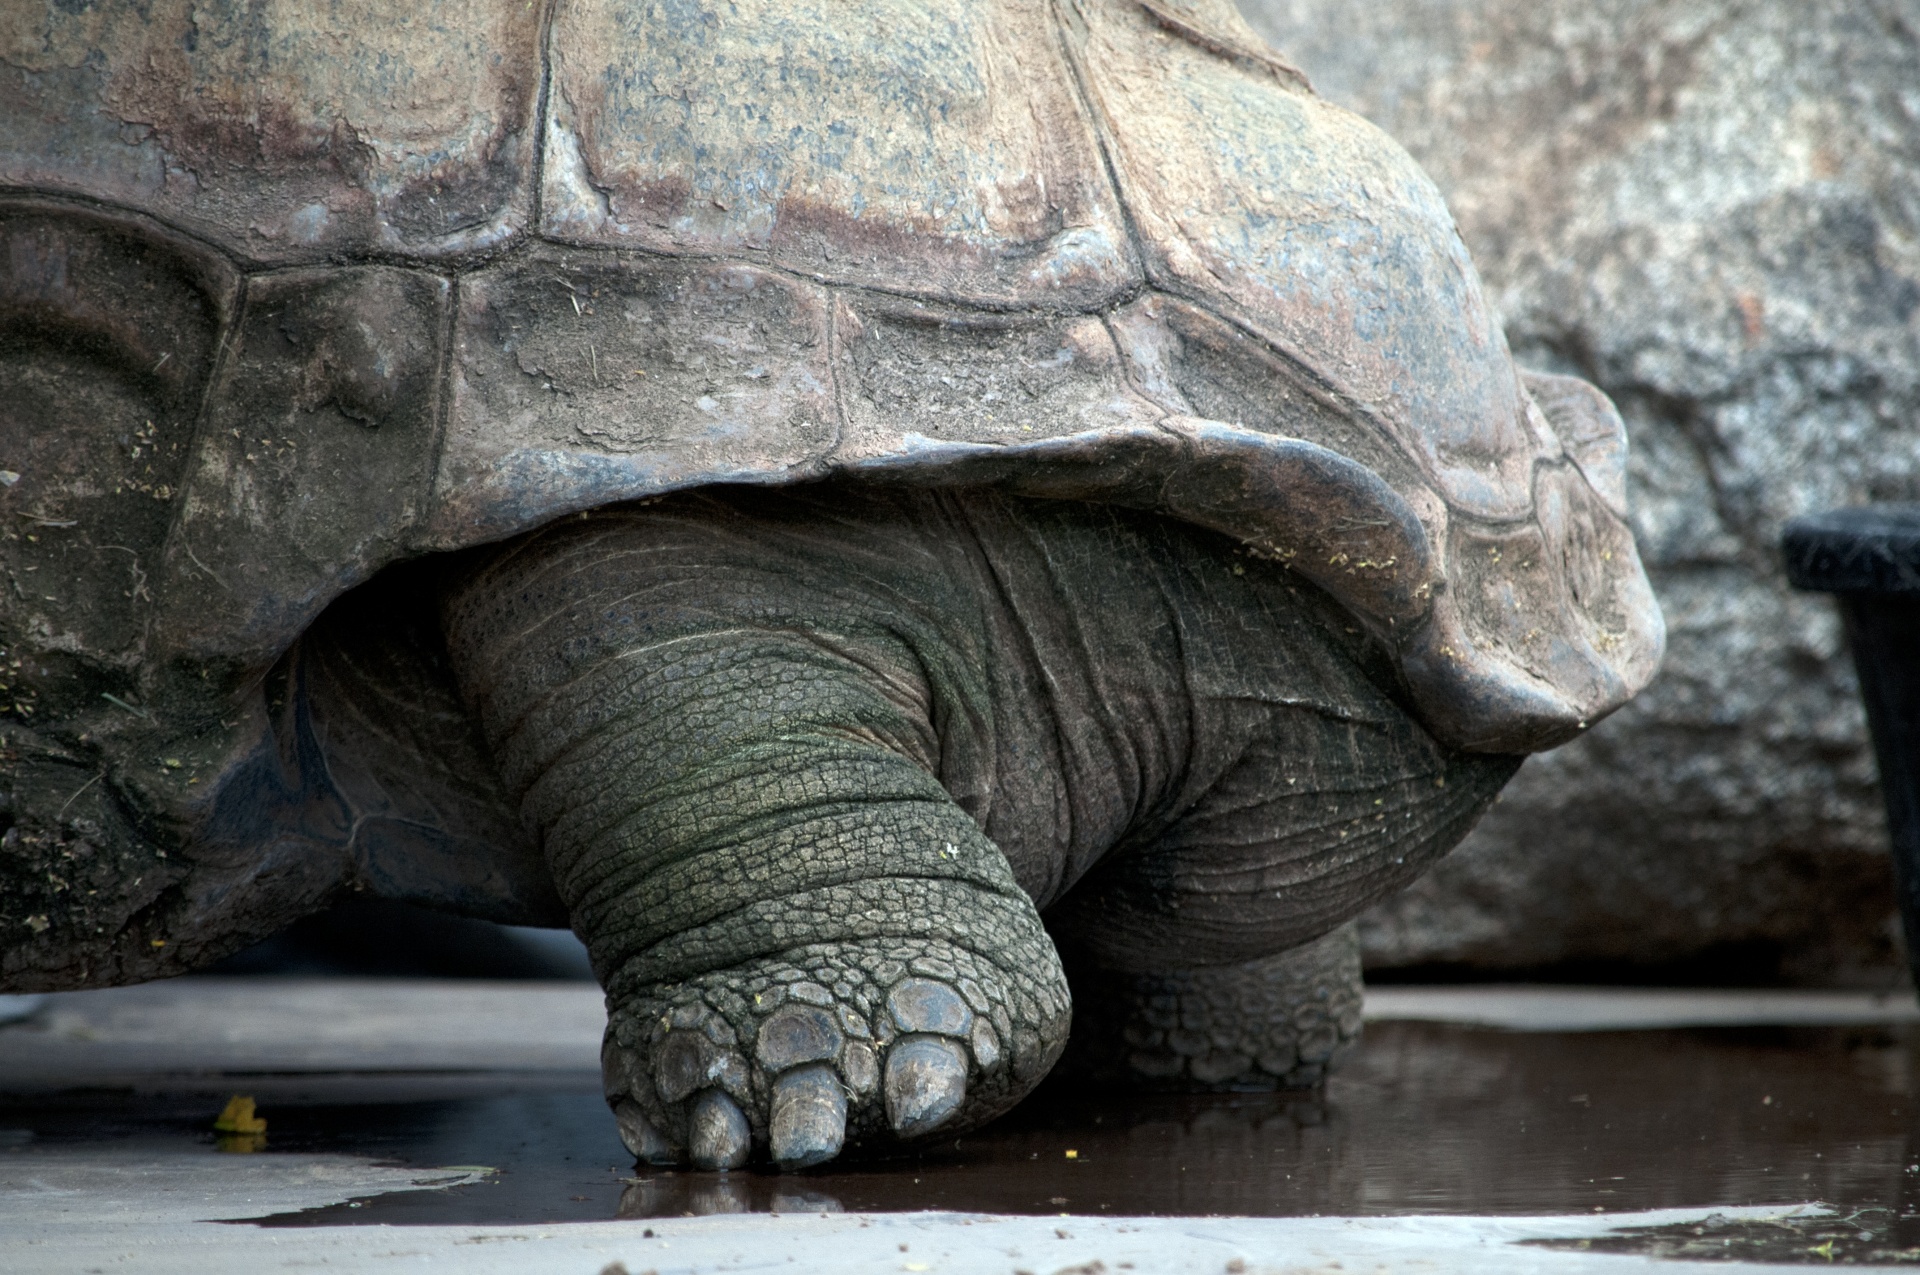 Download Free Photo Of Tortoise Turtle Leg Legs Shell From Needpix Com